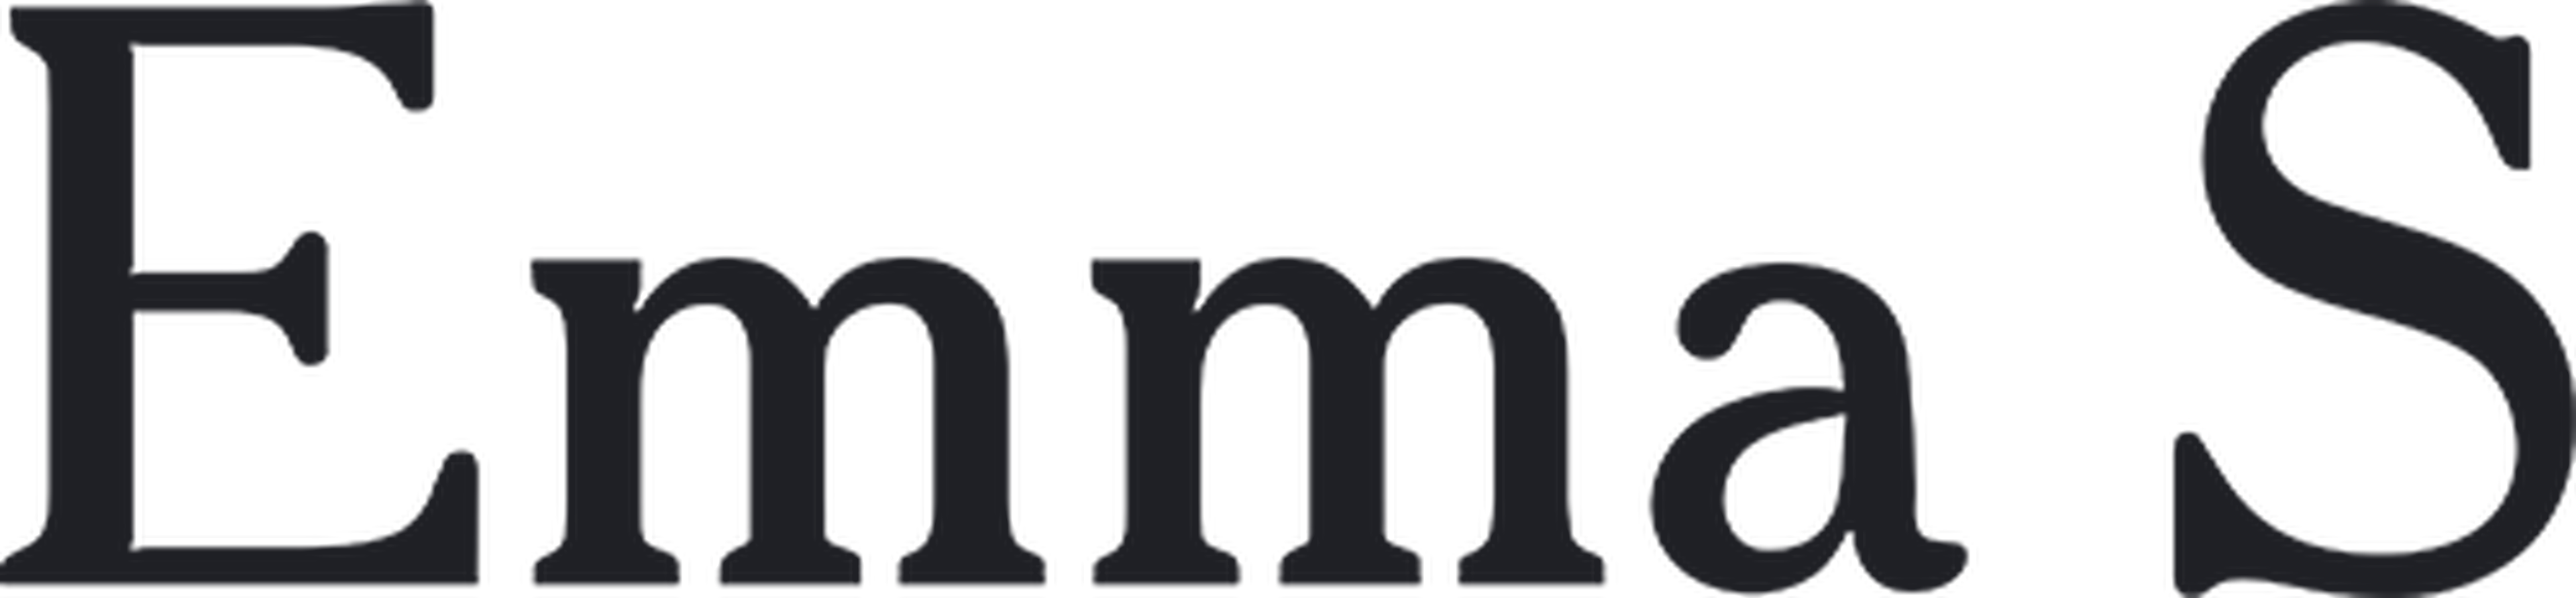 Emma S logotype